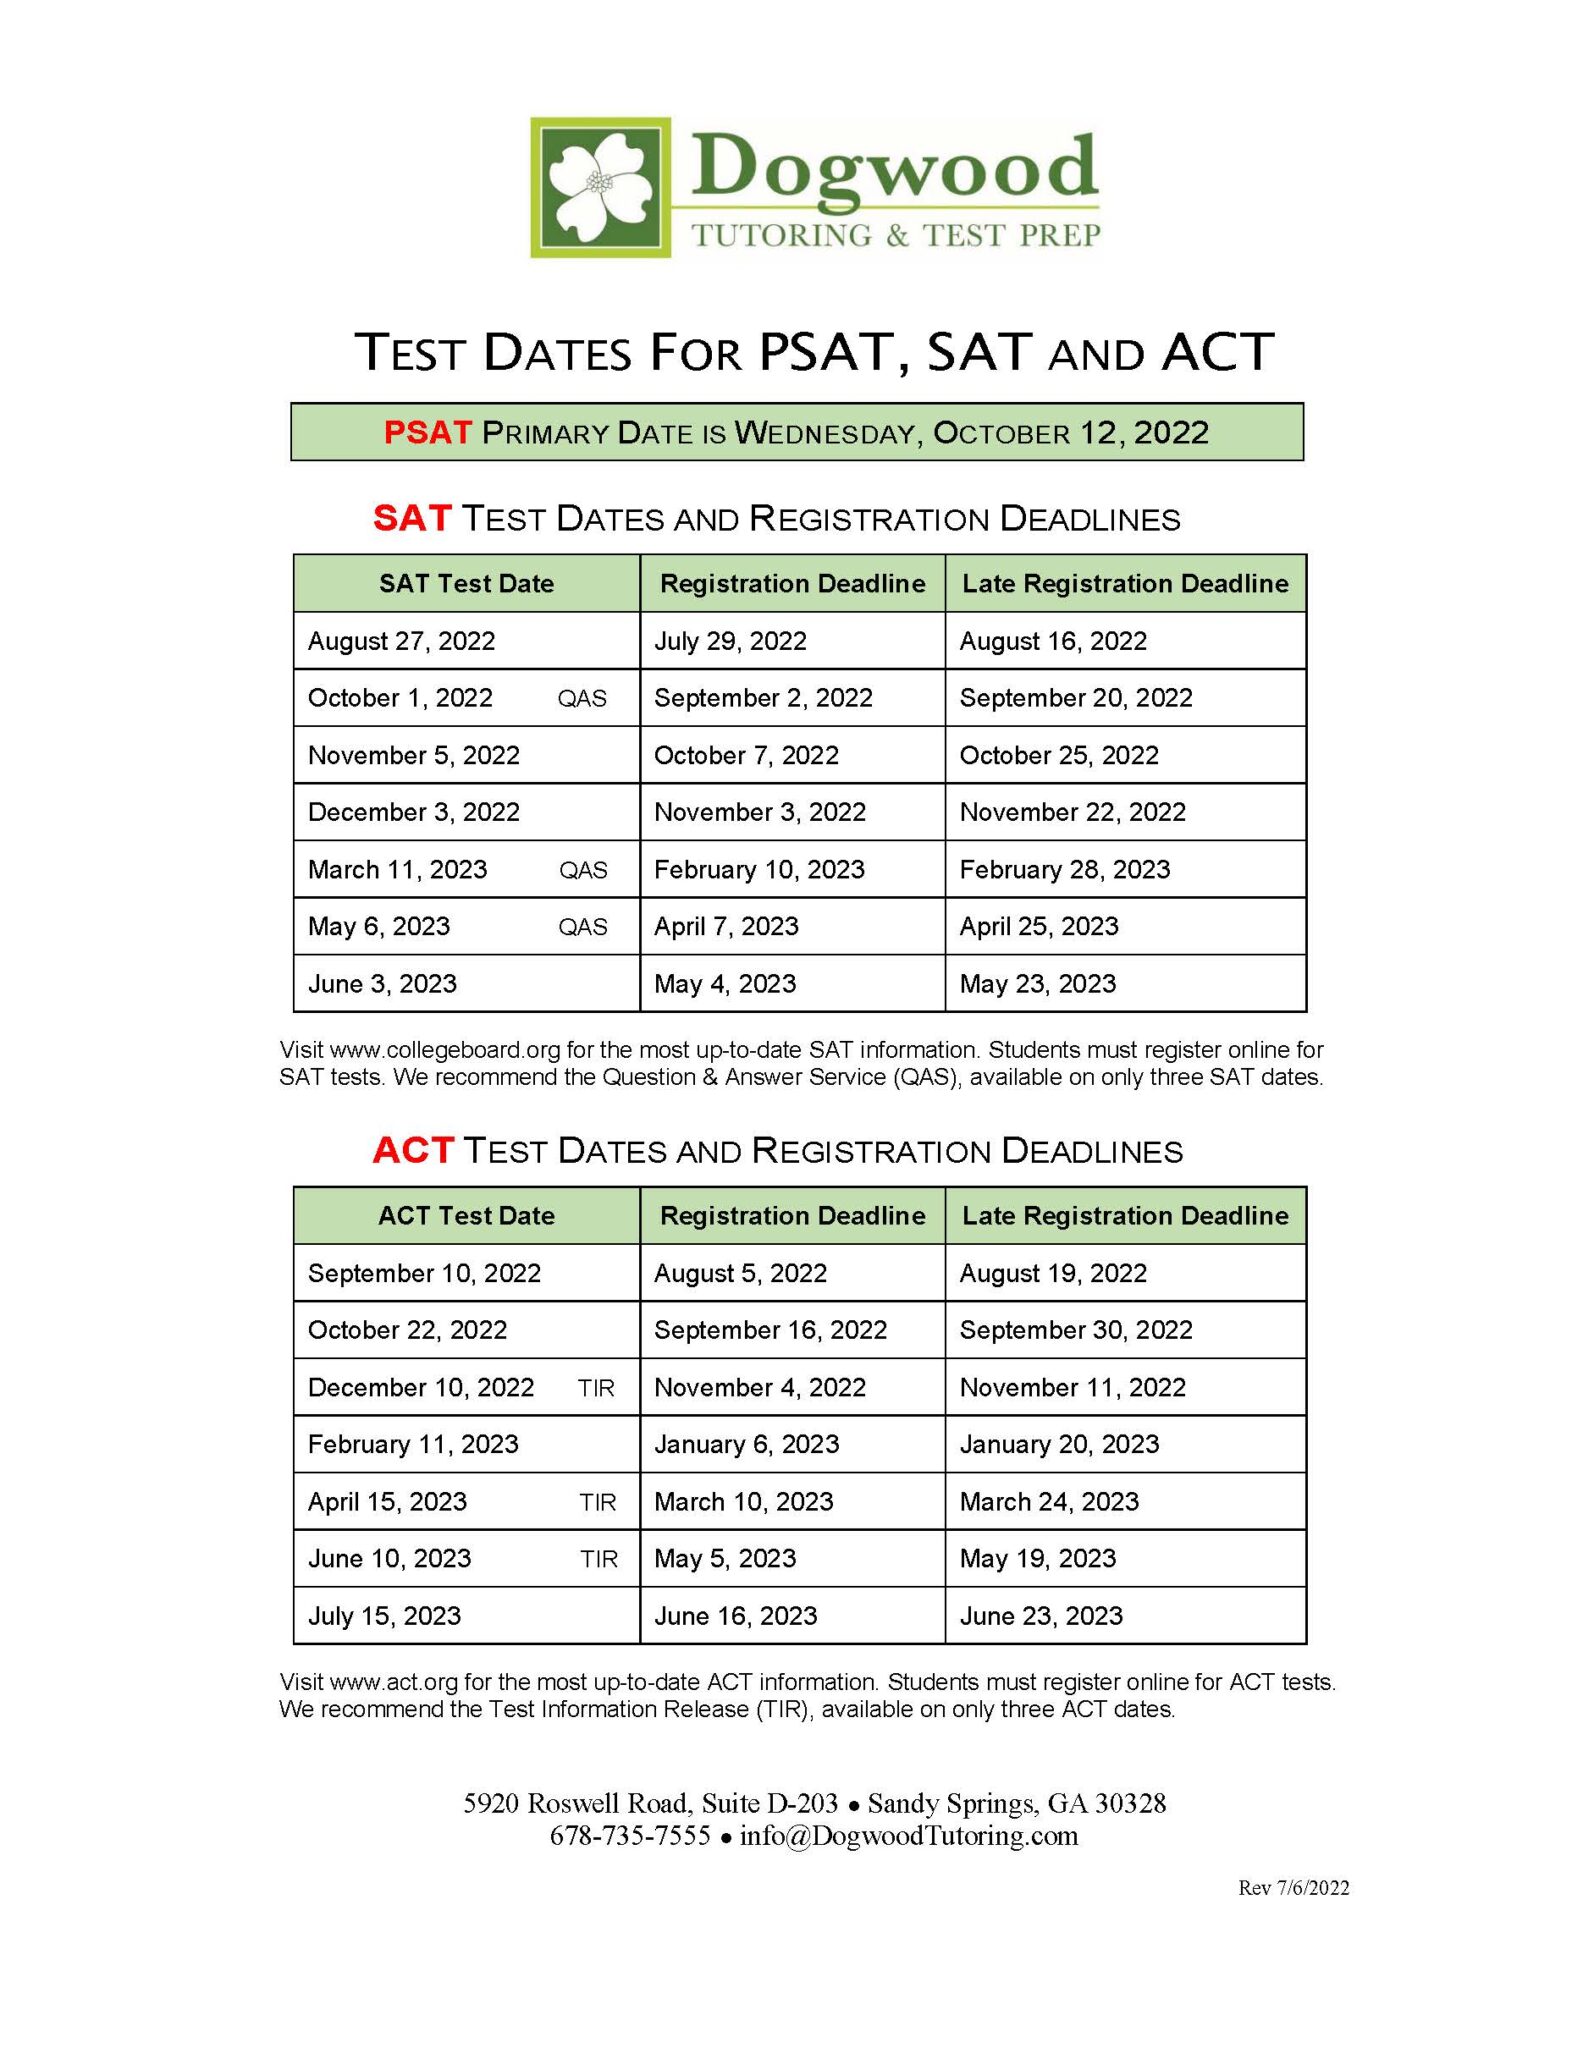 SATACT Test Dates for 202223 Dogwood Tutoring & Test Prep